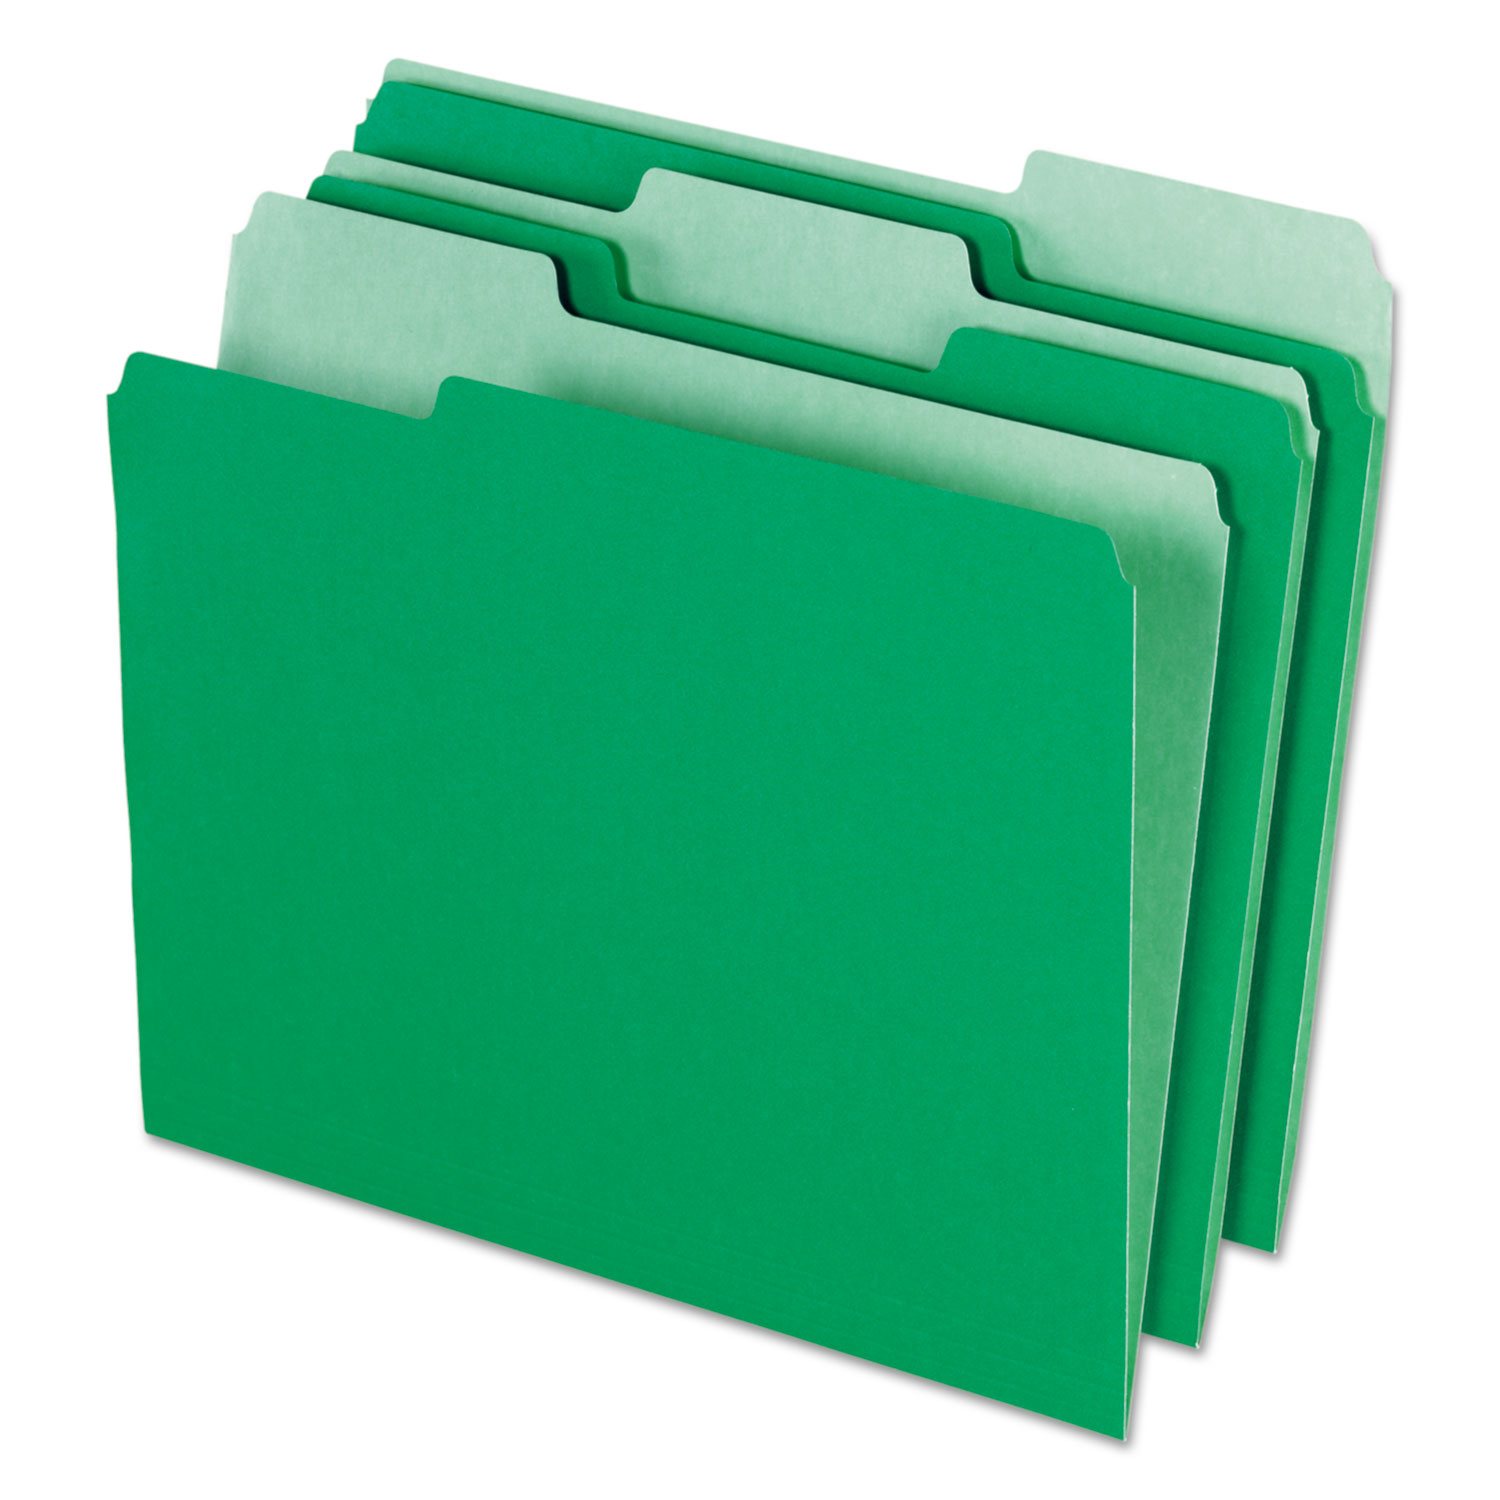  Pendaflex 4210 1/3 BGR Interior File Folders, 1/3-Cut Tabs, Letter Size, Bright Green, 100/Box (PFX421013BGR) 